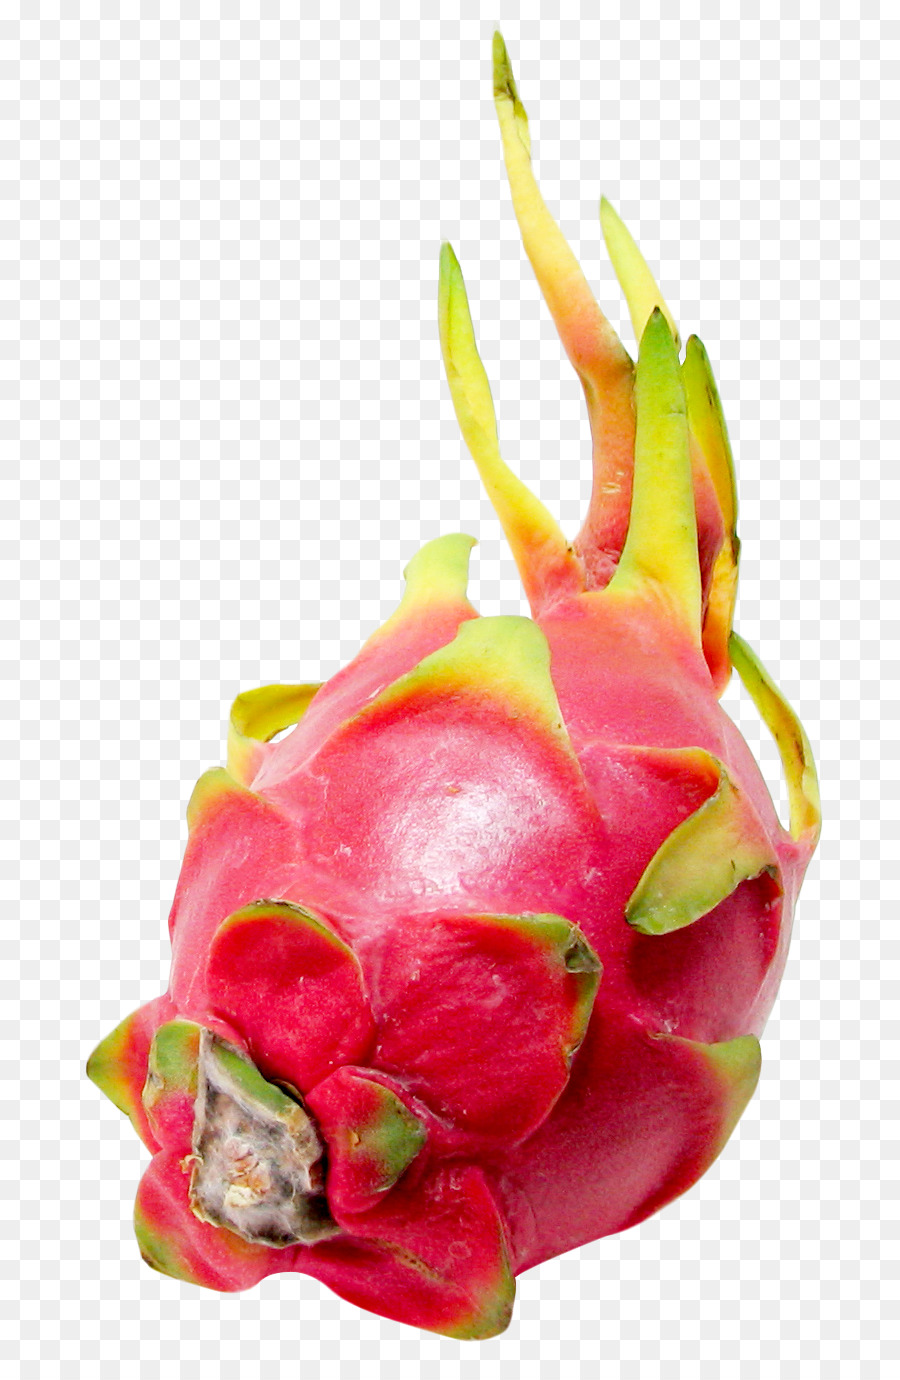 Succo Di Frutta Pitaya - pitaya o dragon fruit